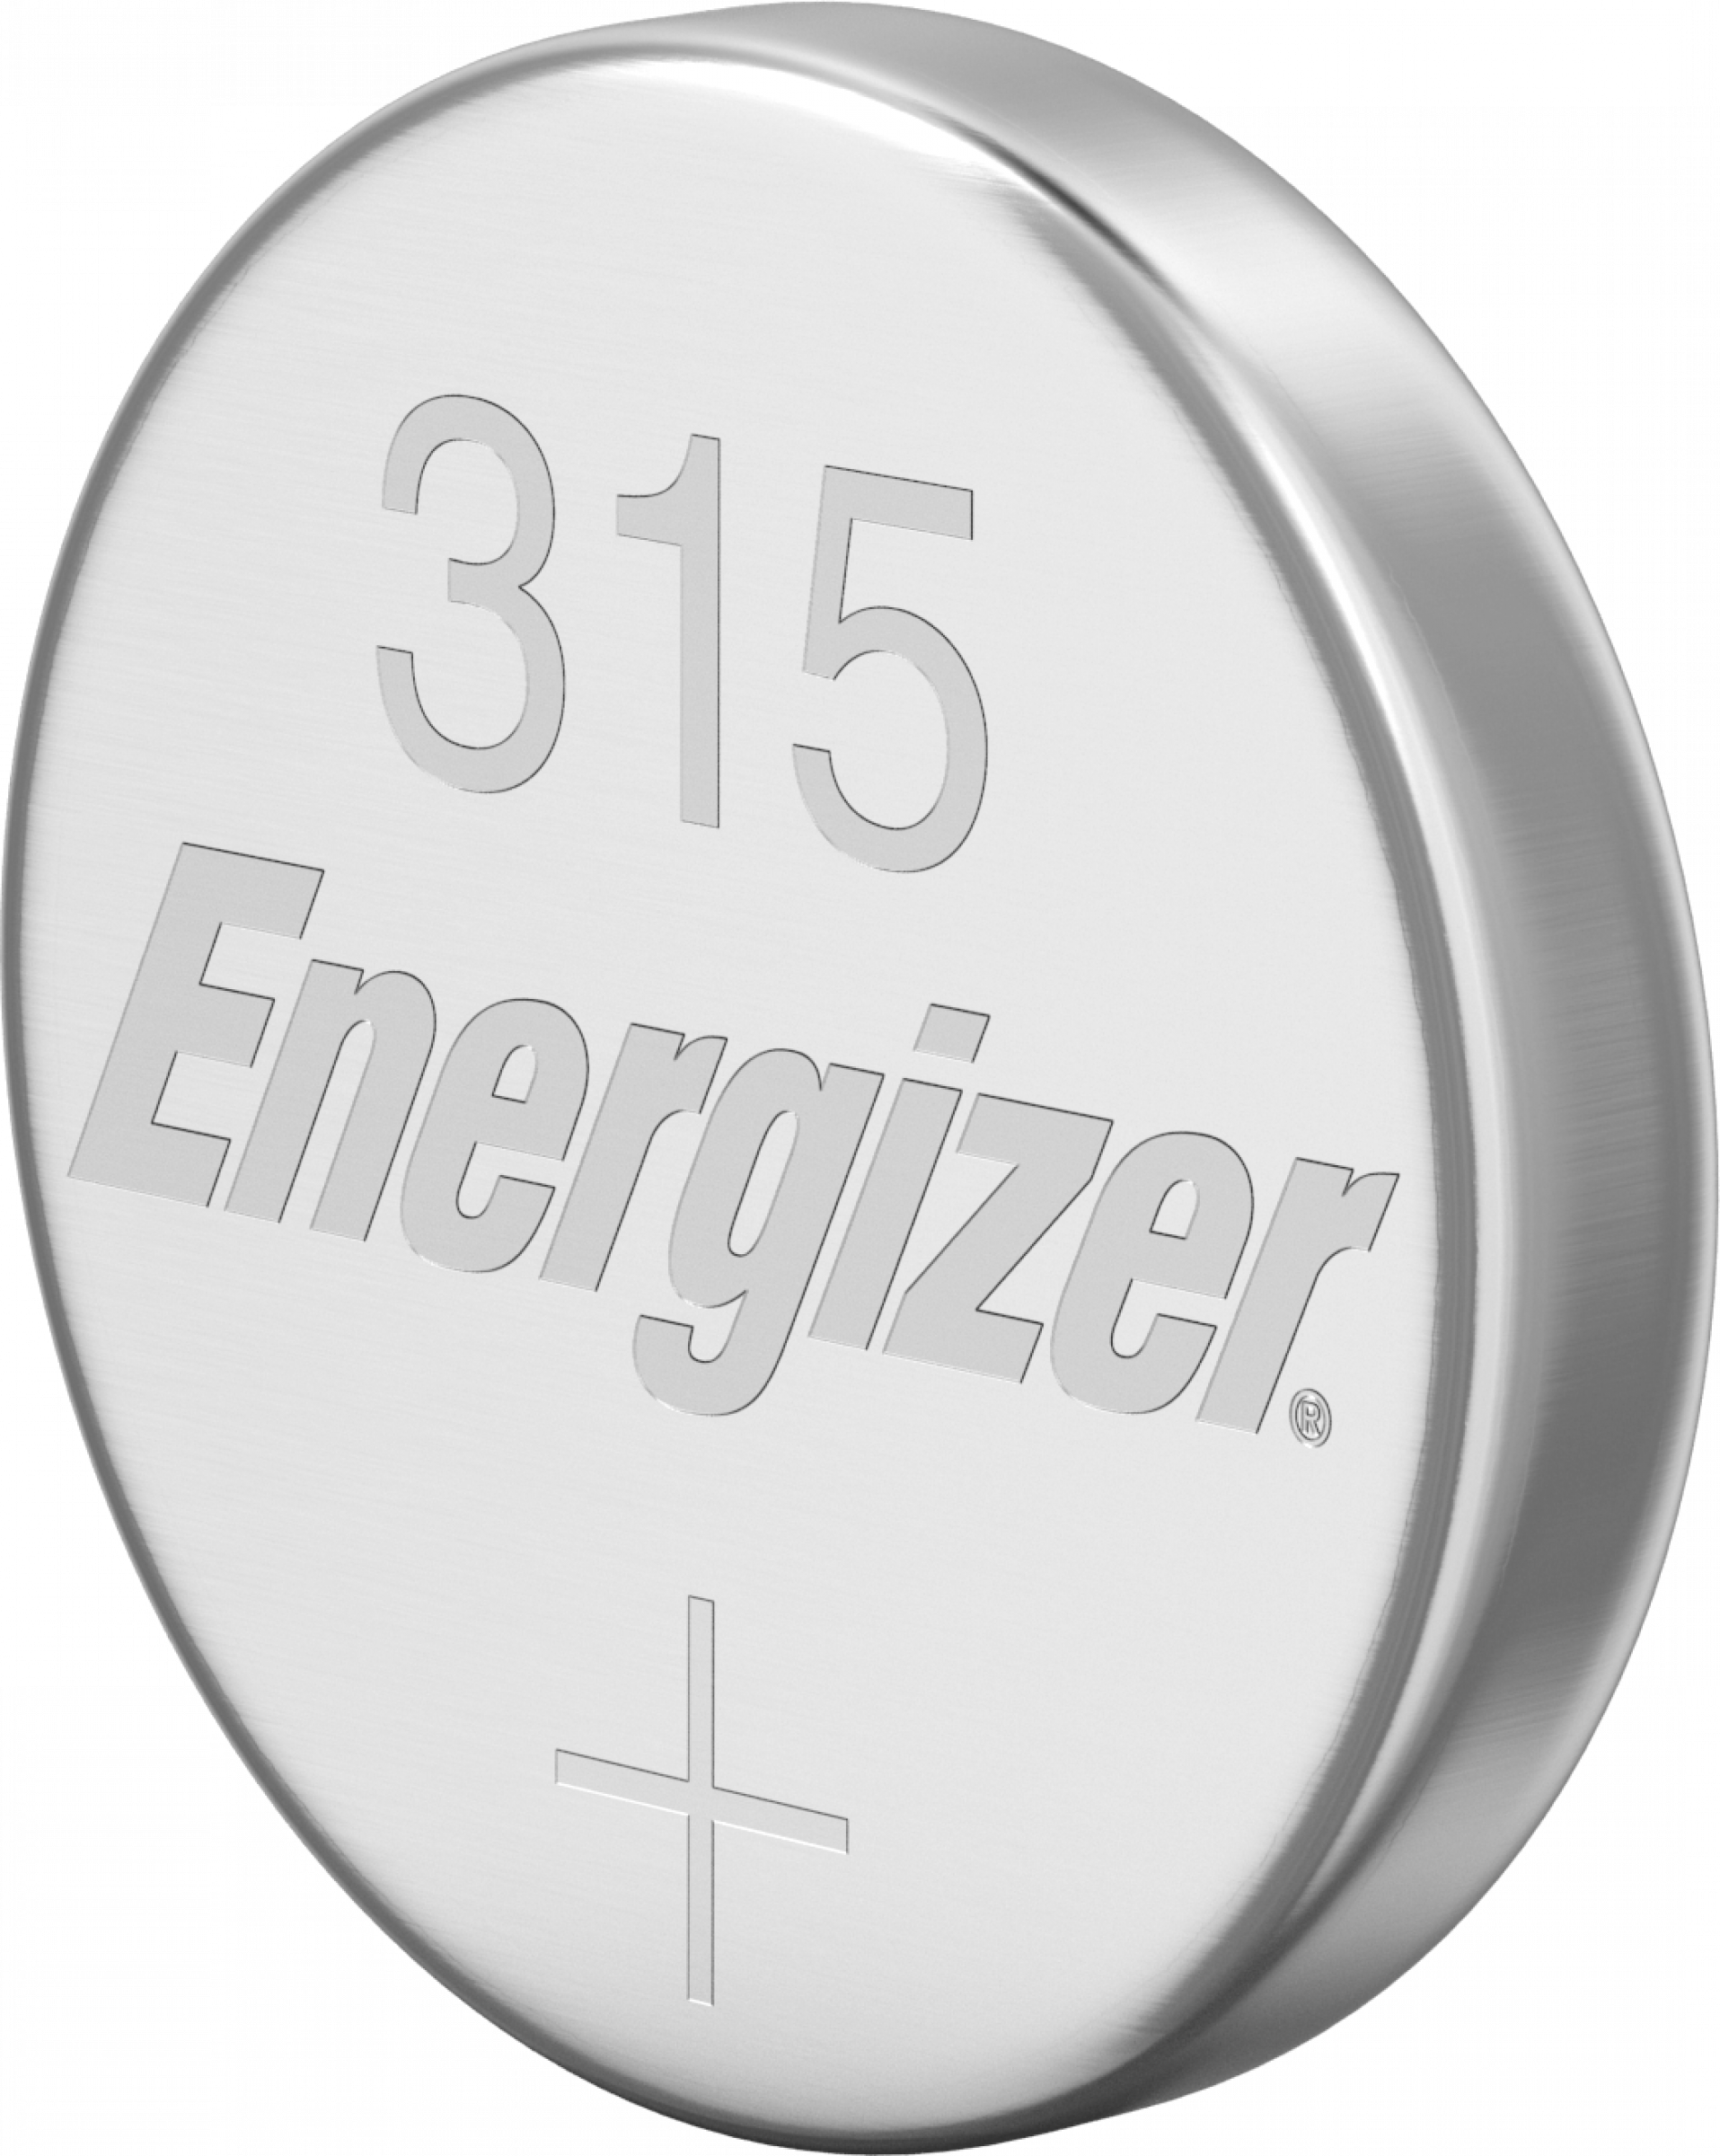 Energizer Uhrenknopfzelle 315 SR67 SR716SW Miniblister